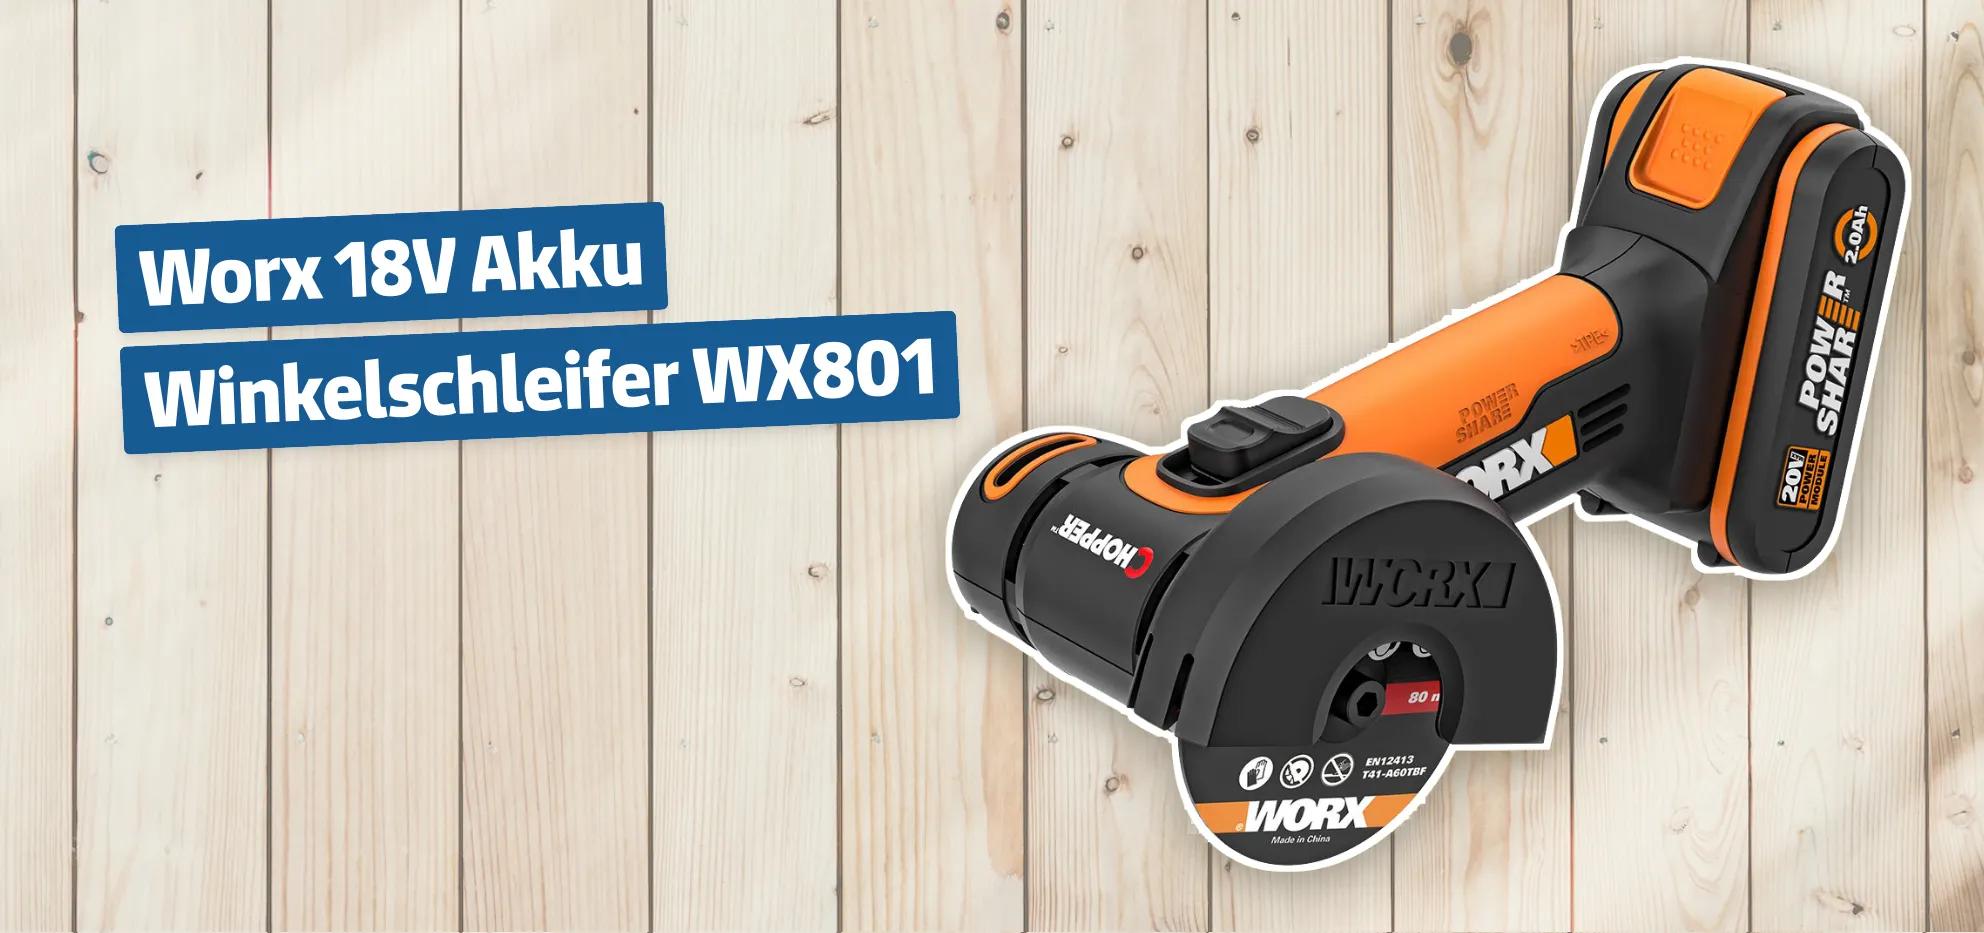 Worx 18V Akku Winkelschleifer WX801